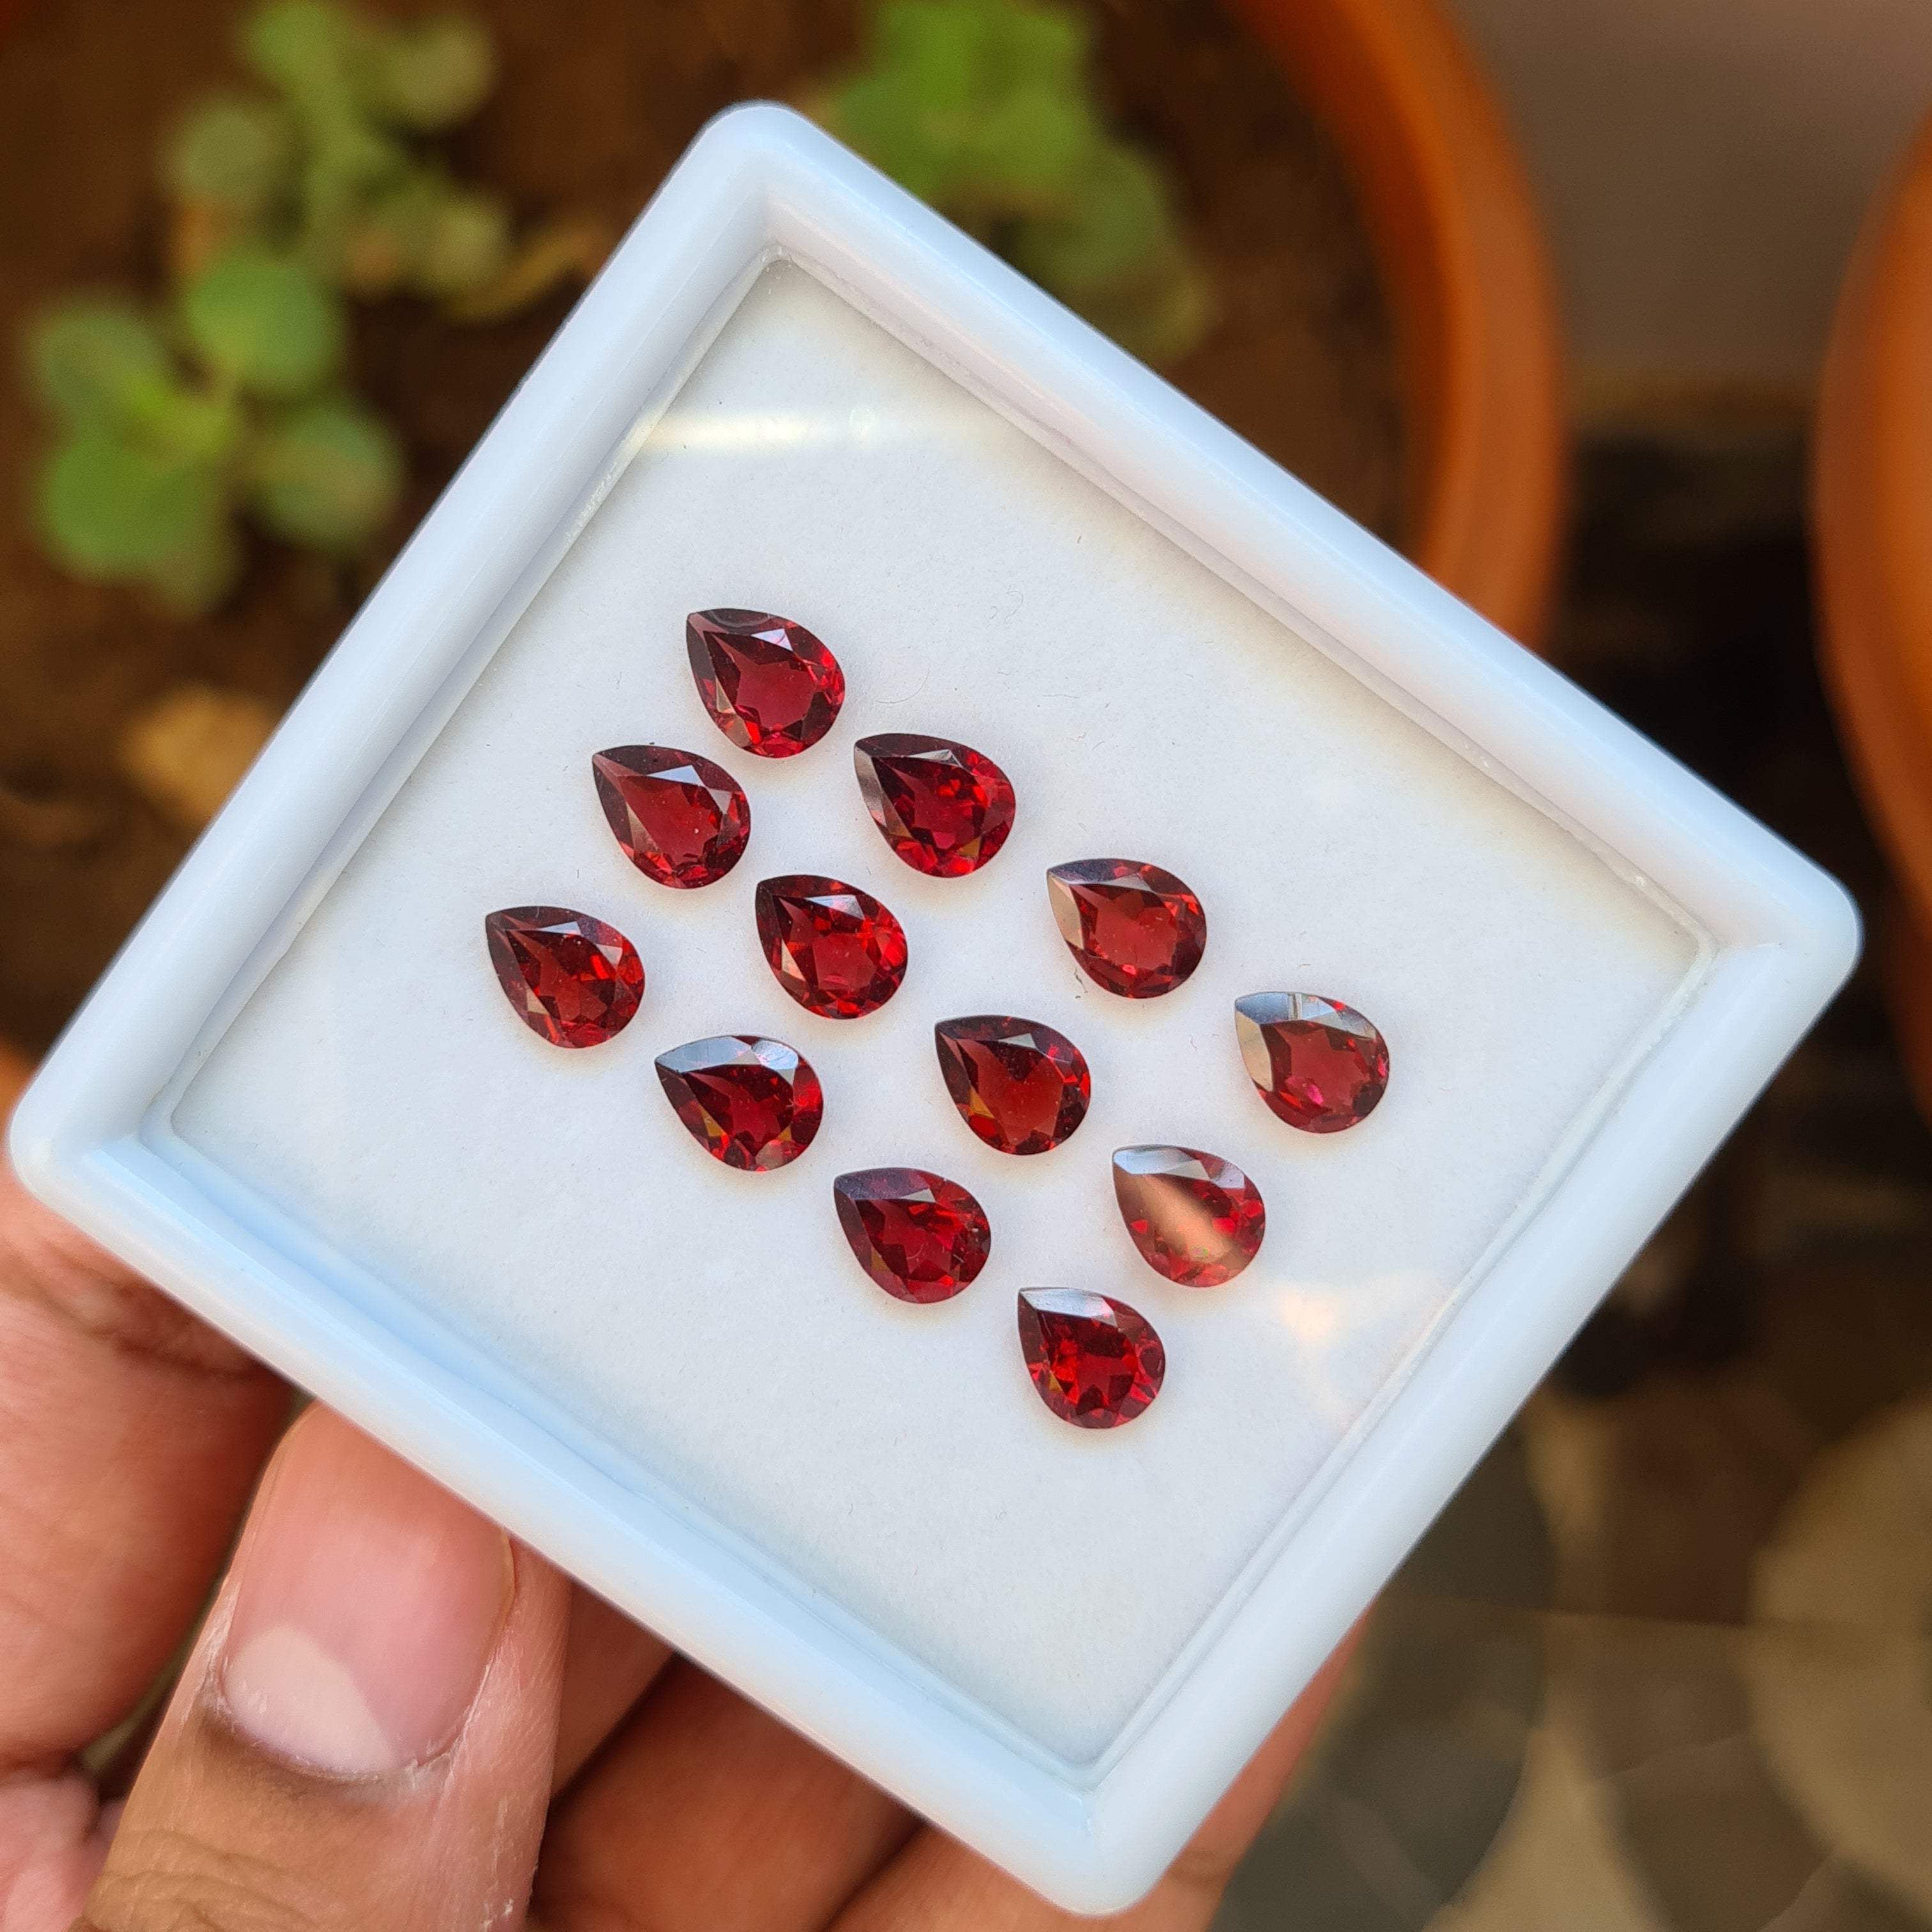 10 Pcs Natural Garnet Faceted Gemstones Pear Shape, 6x9mm Gems Lot - The LabradoriteKing